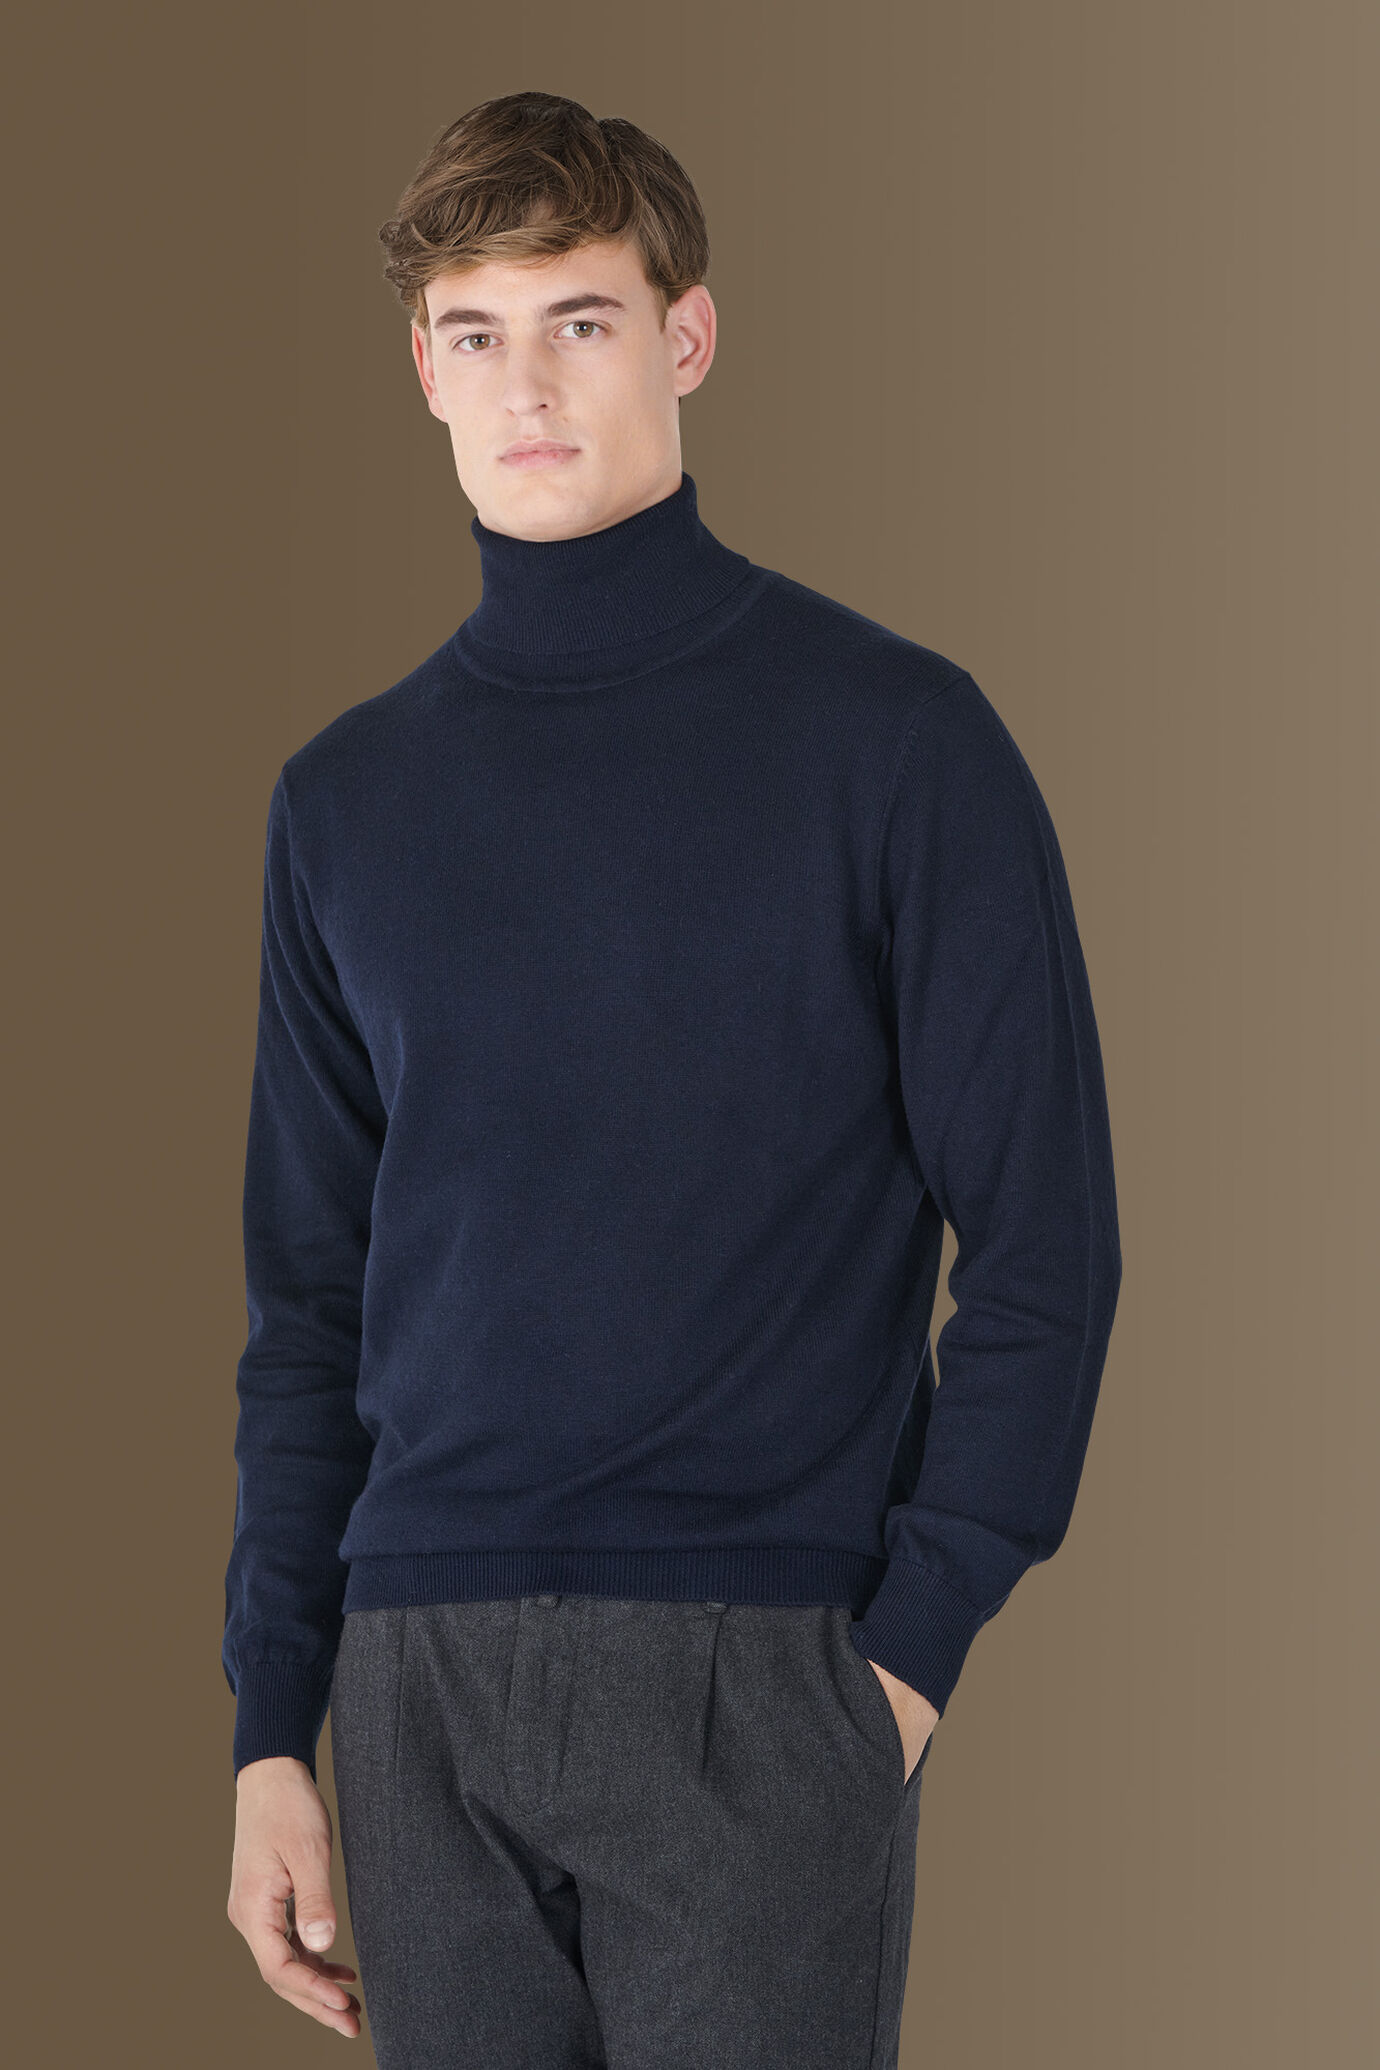 Turtleneck sweater in cotton- wool blend